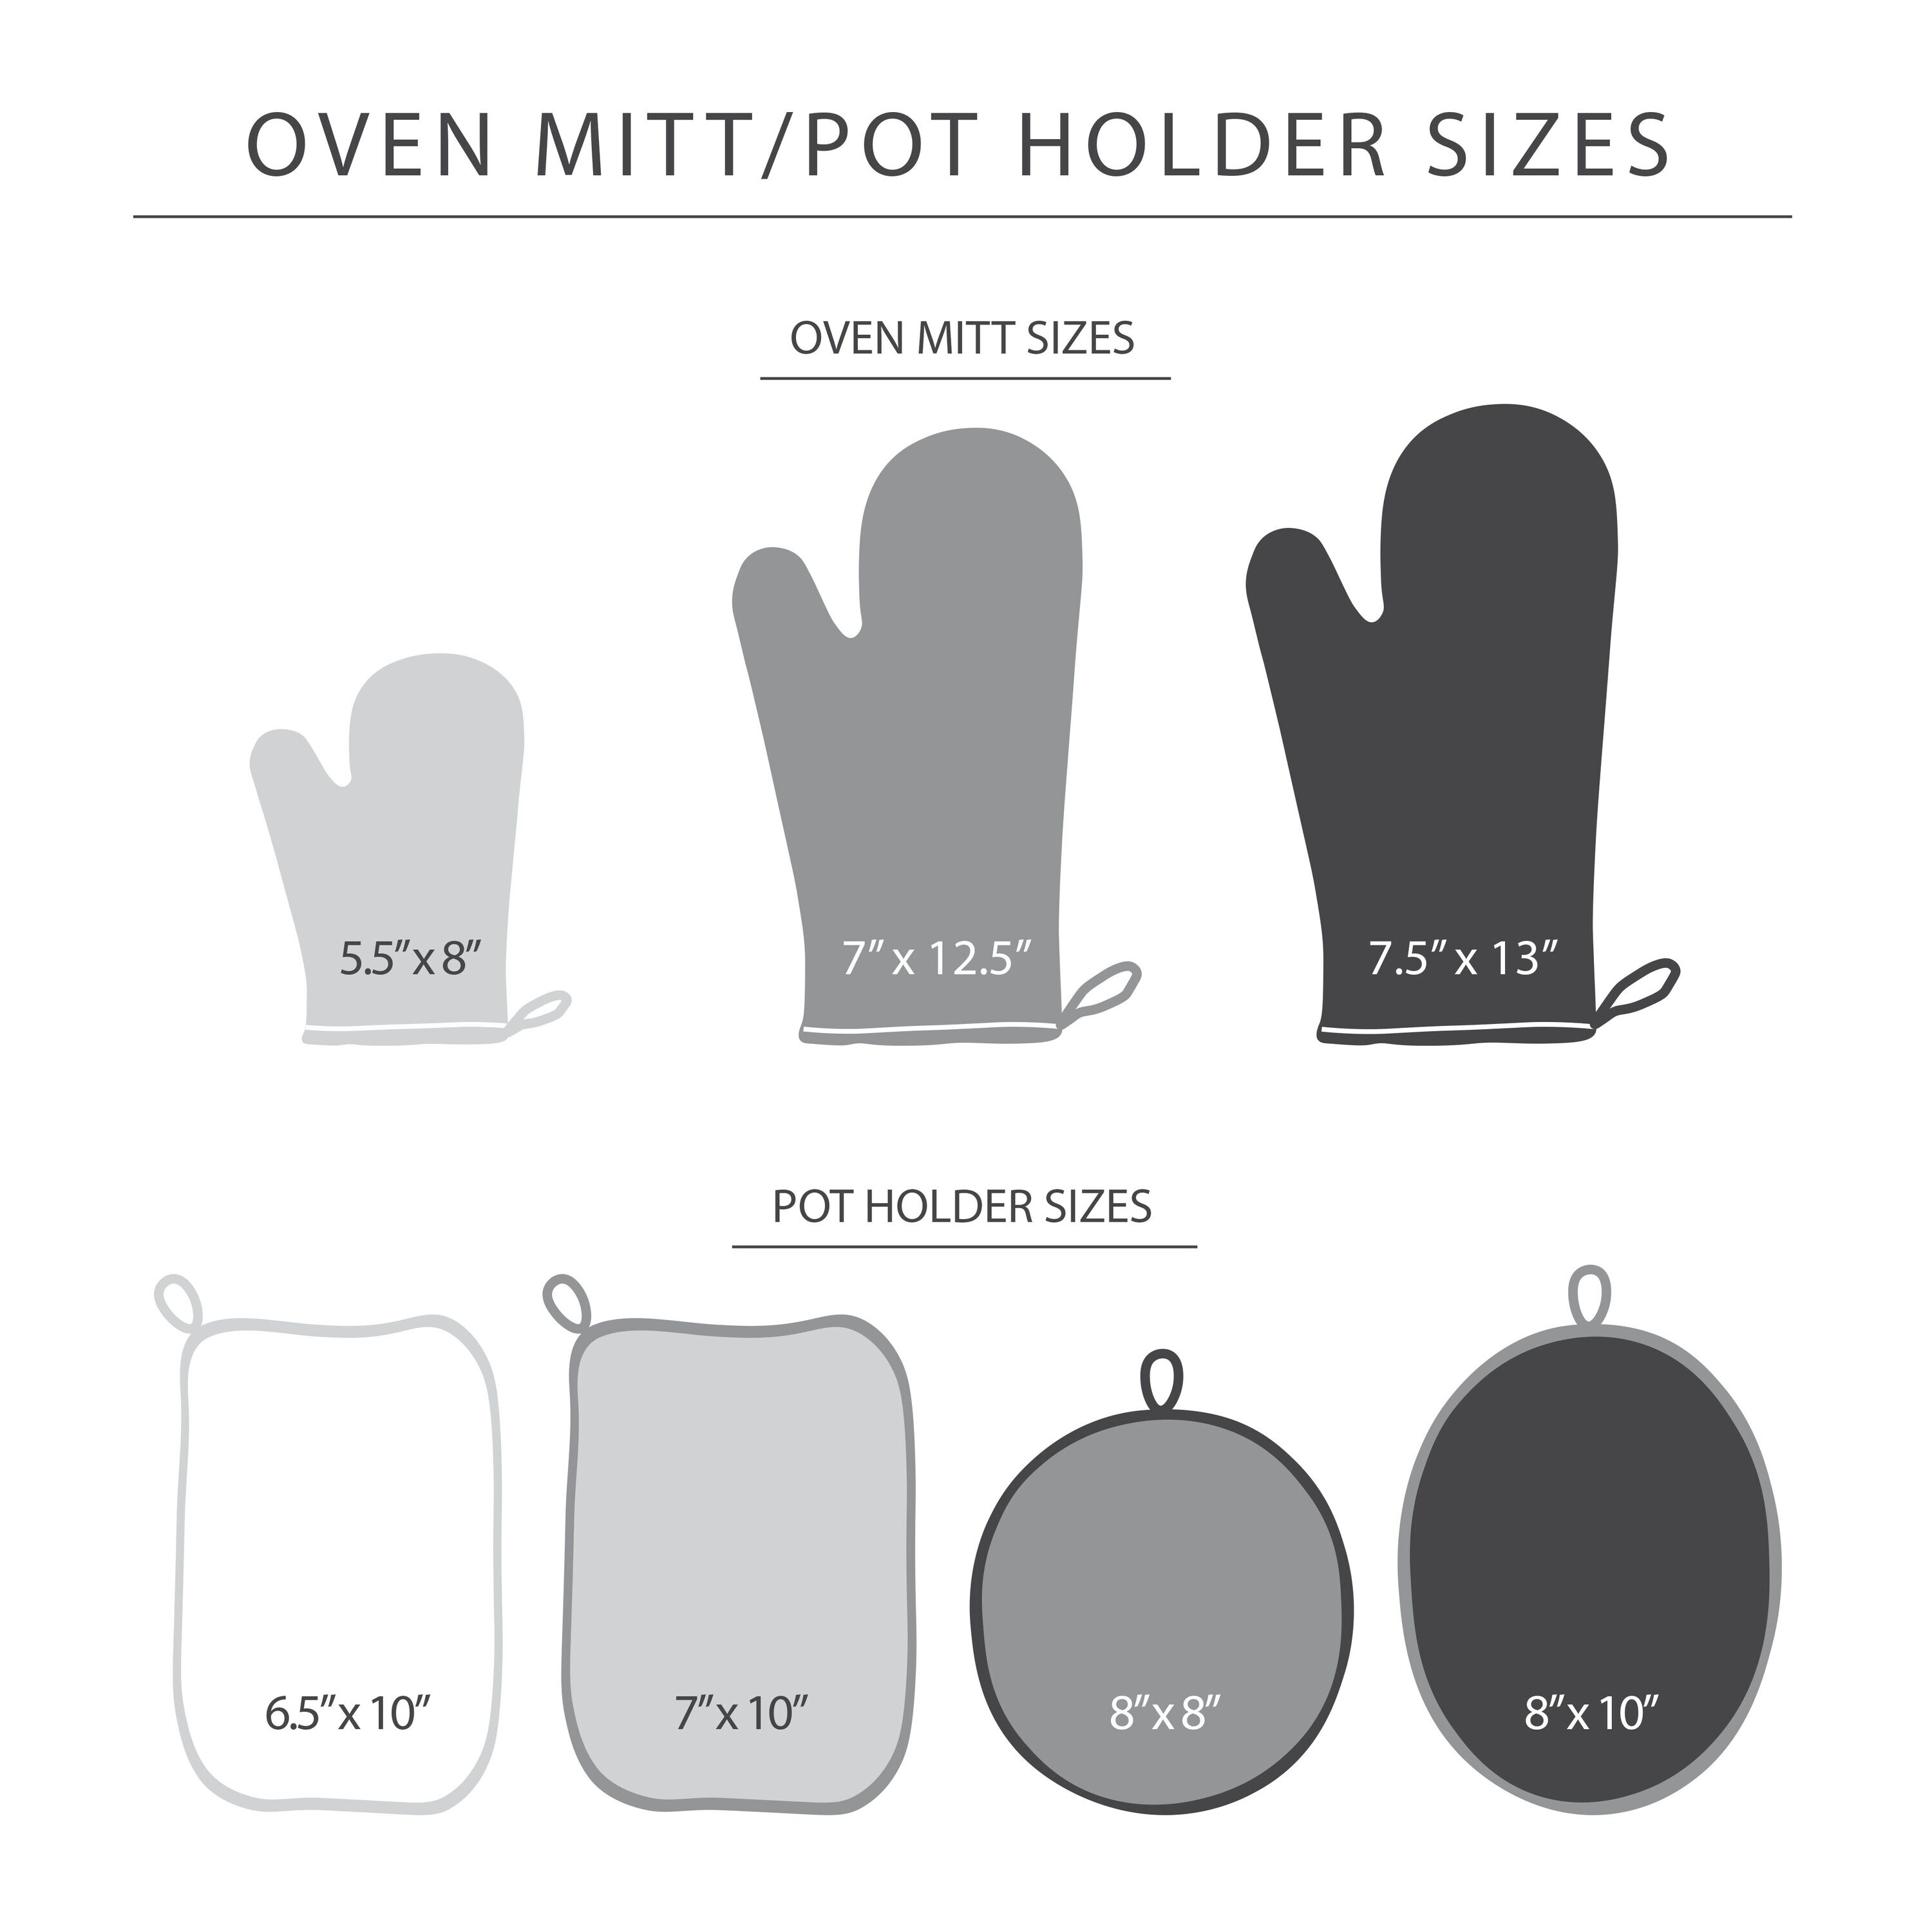 Design Imports Floral 100% Cotton Potholder & Oven Mitt Set